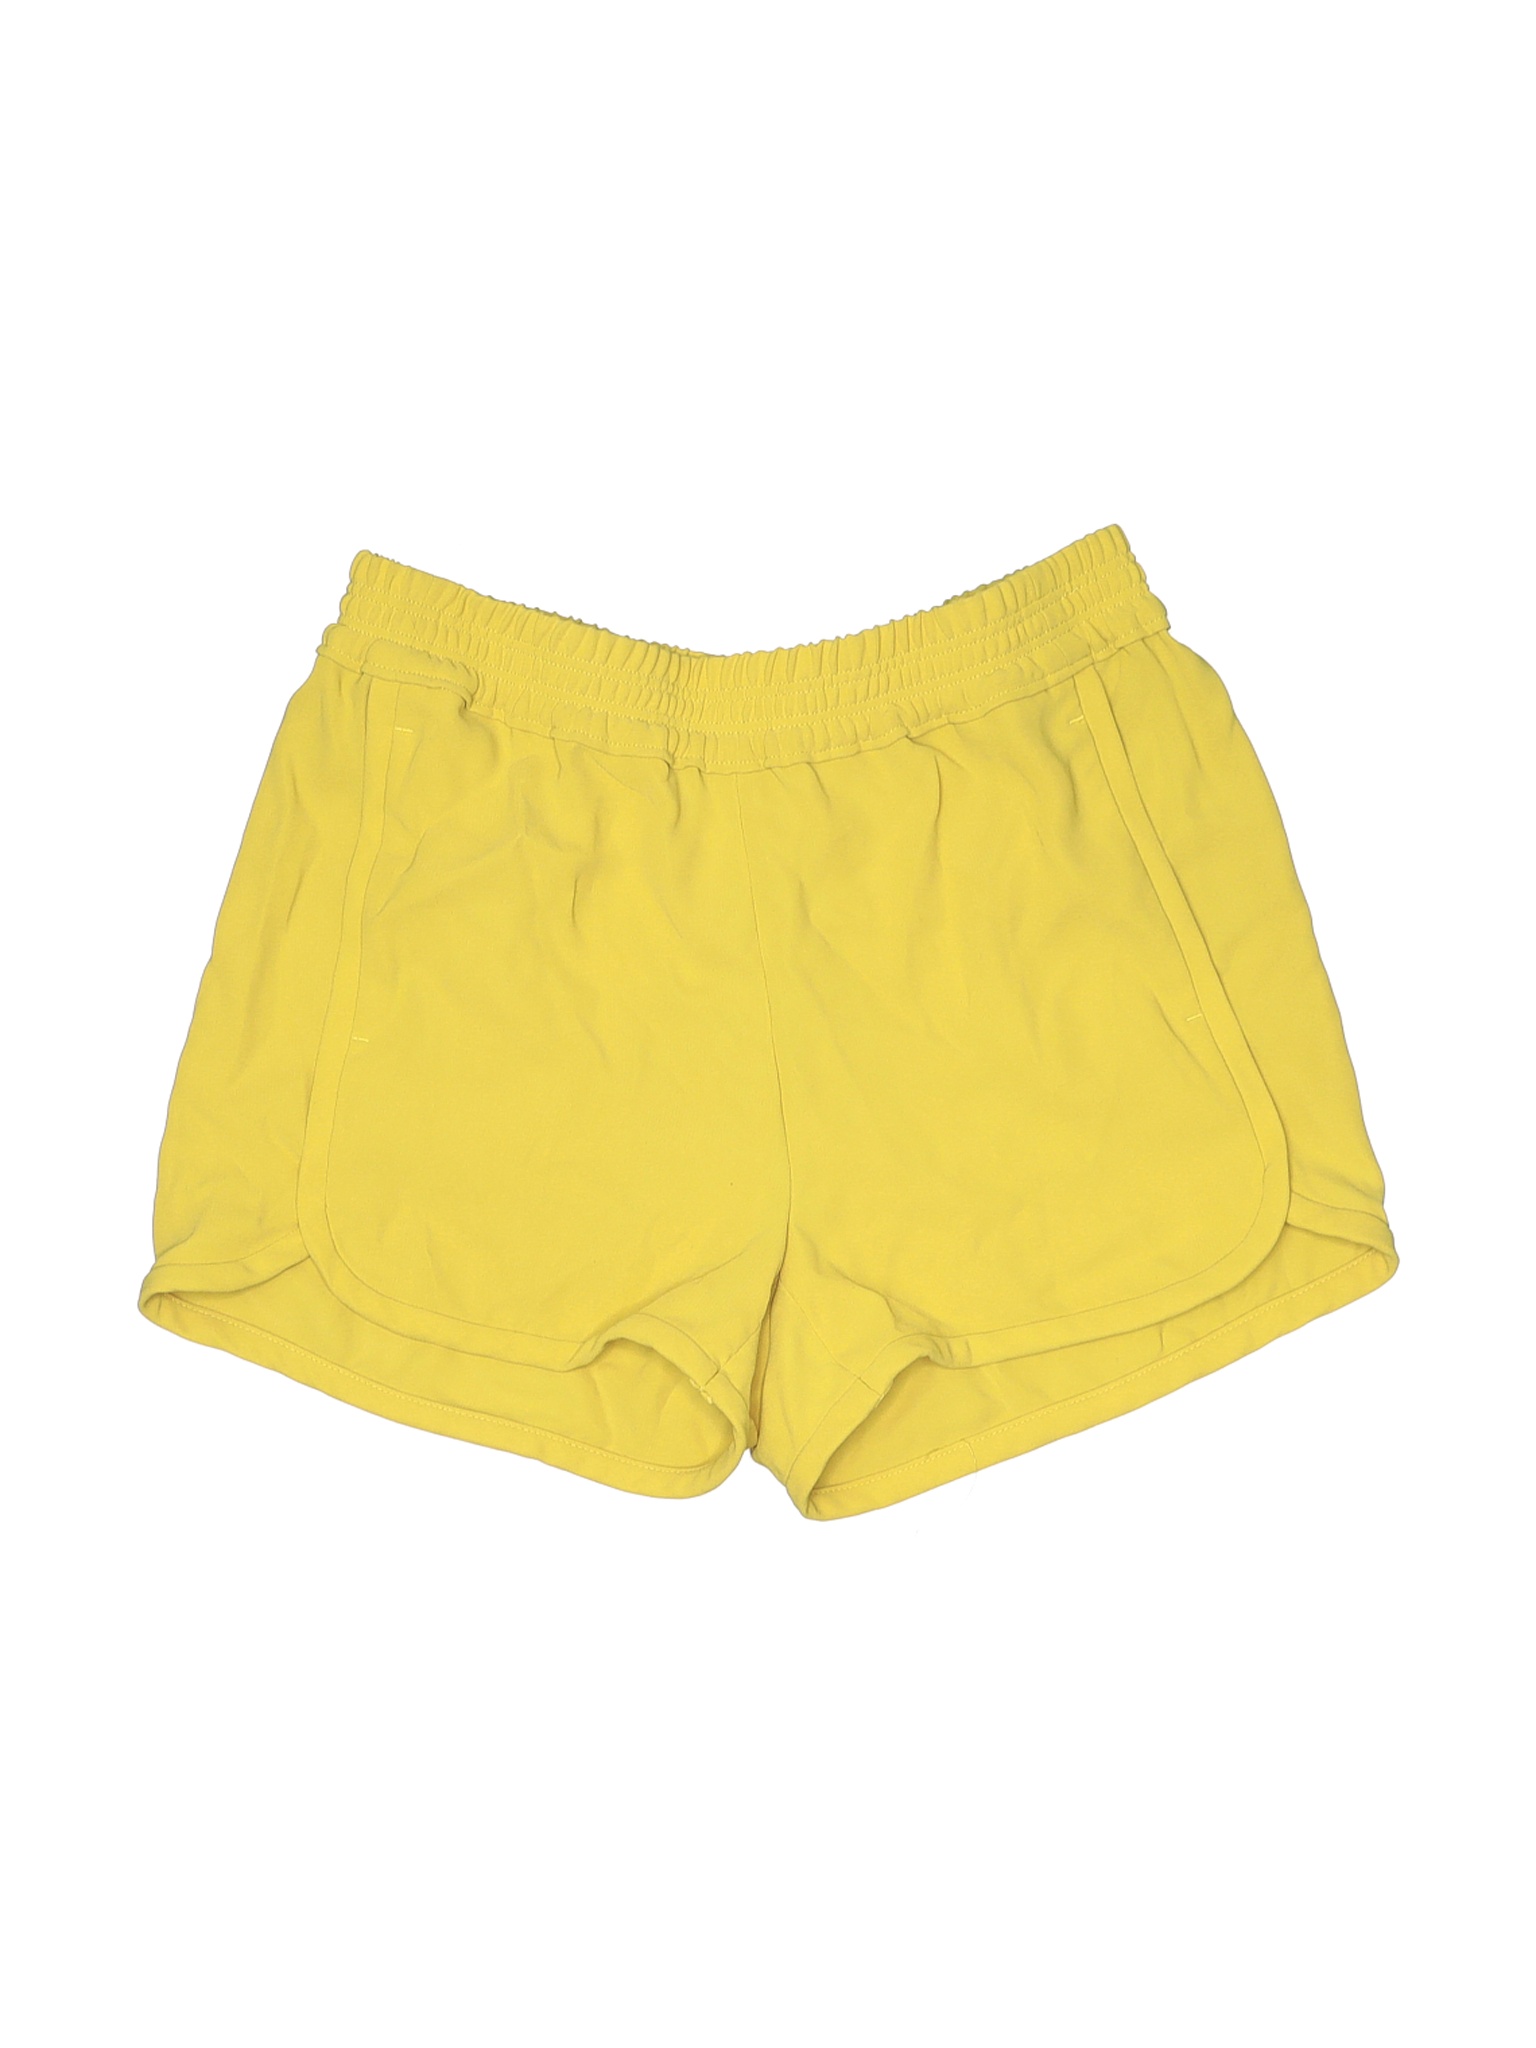 J.Crew Women Yellow Shorts 6 | eBay